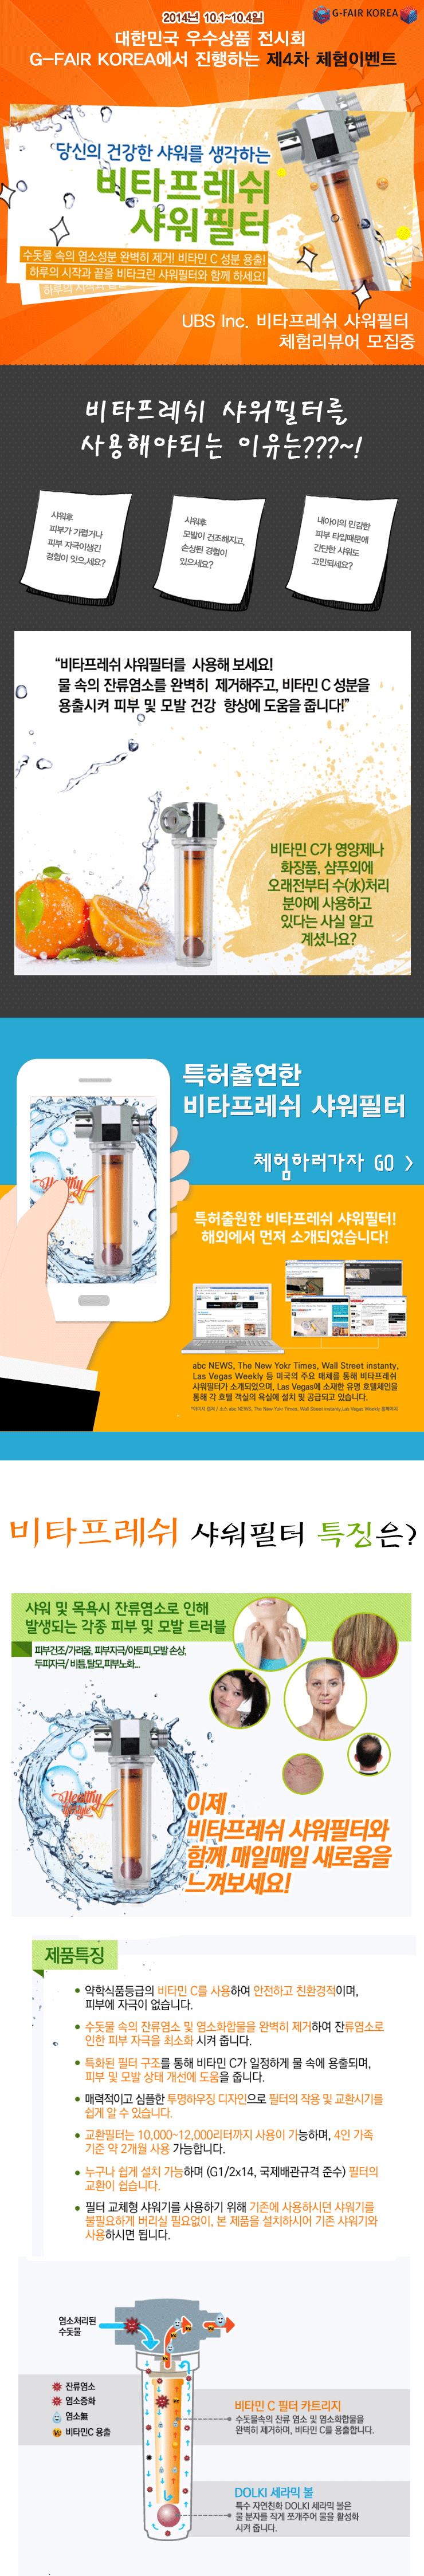 vita fresh shower filter with G Fair Korea 2014